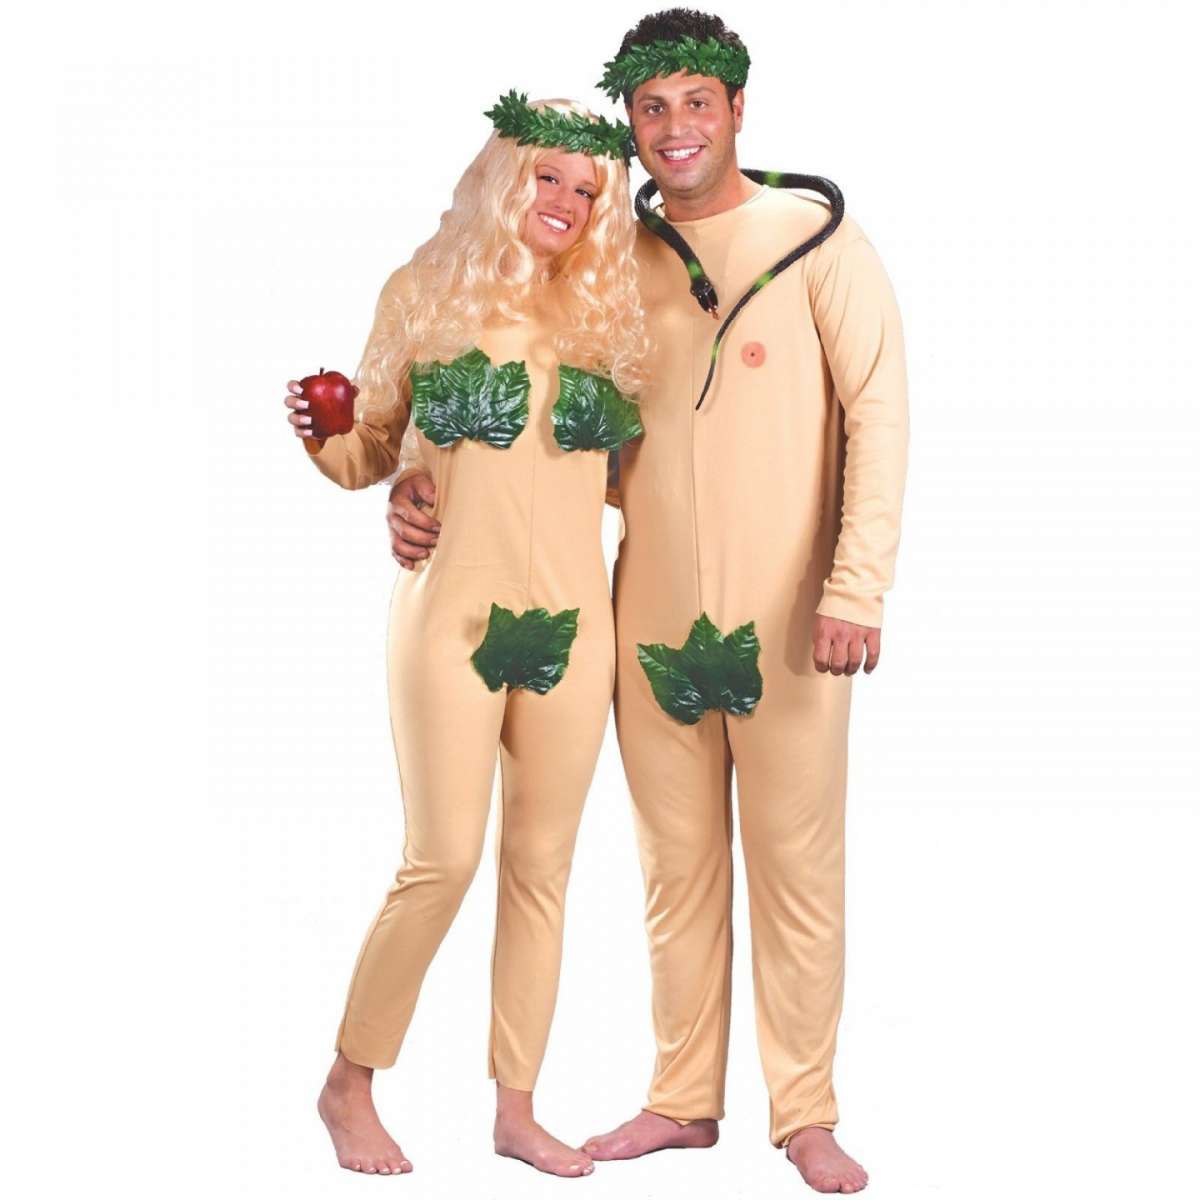 Adamo e Eva